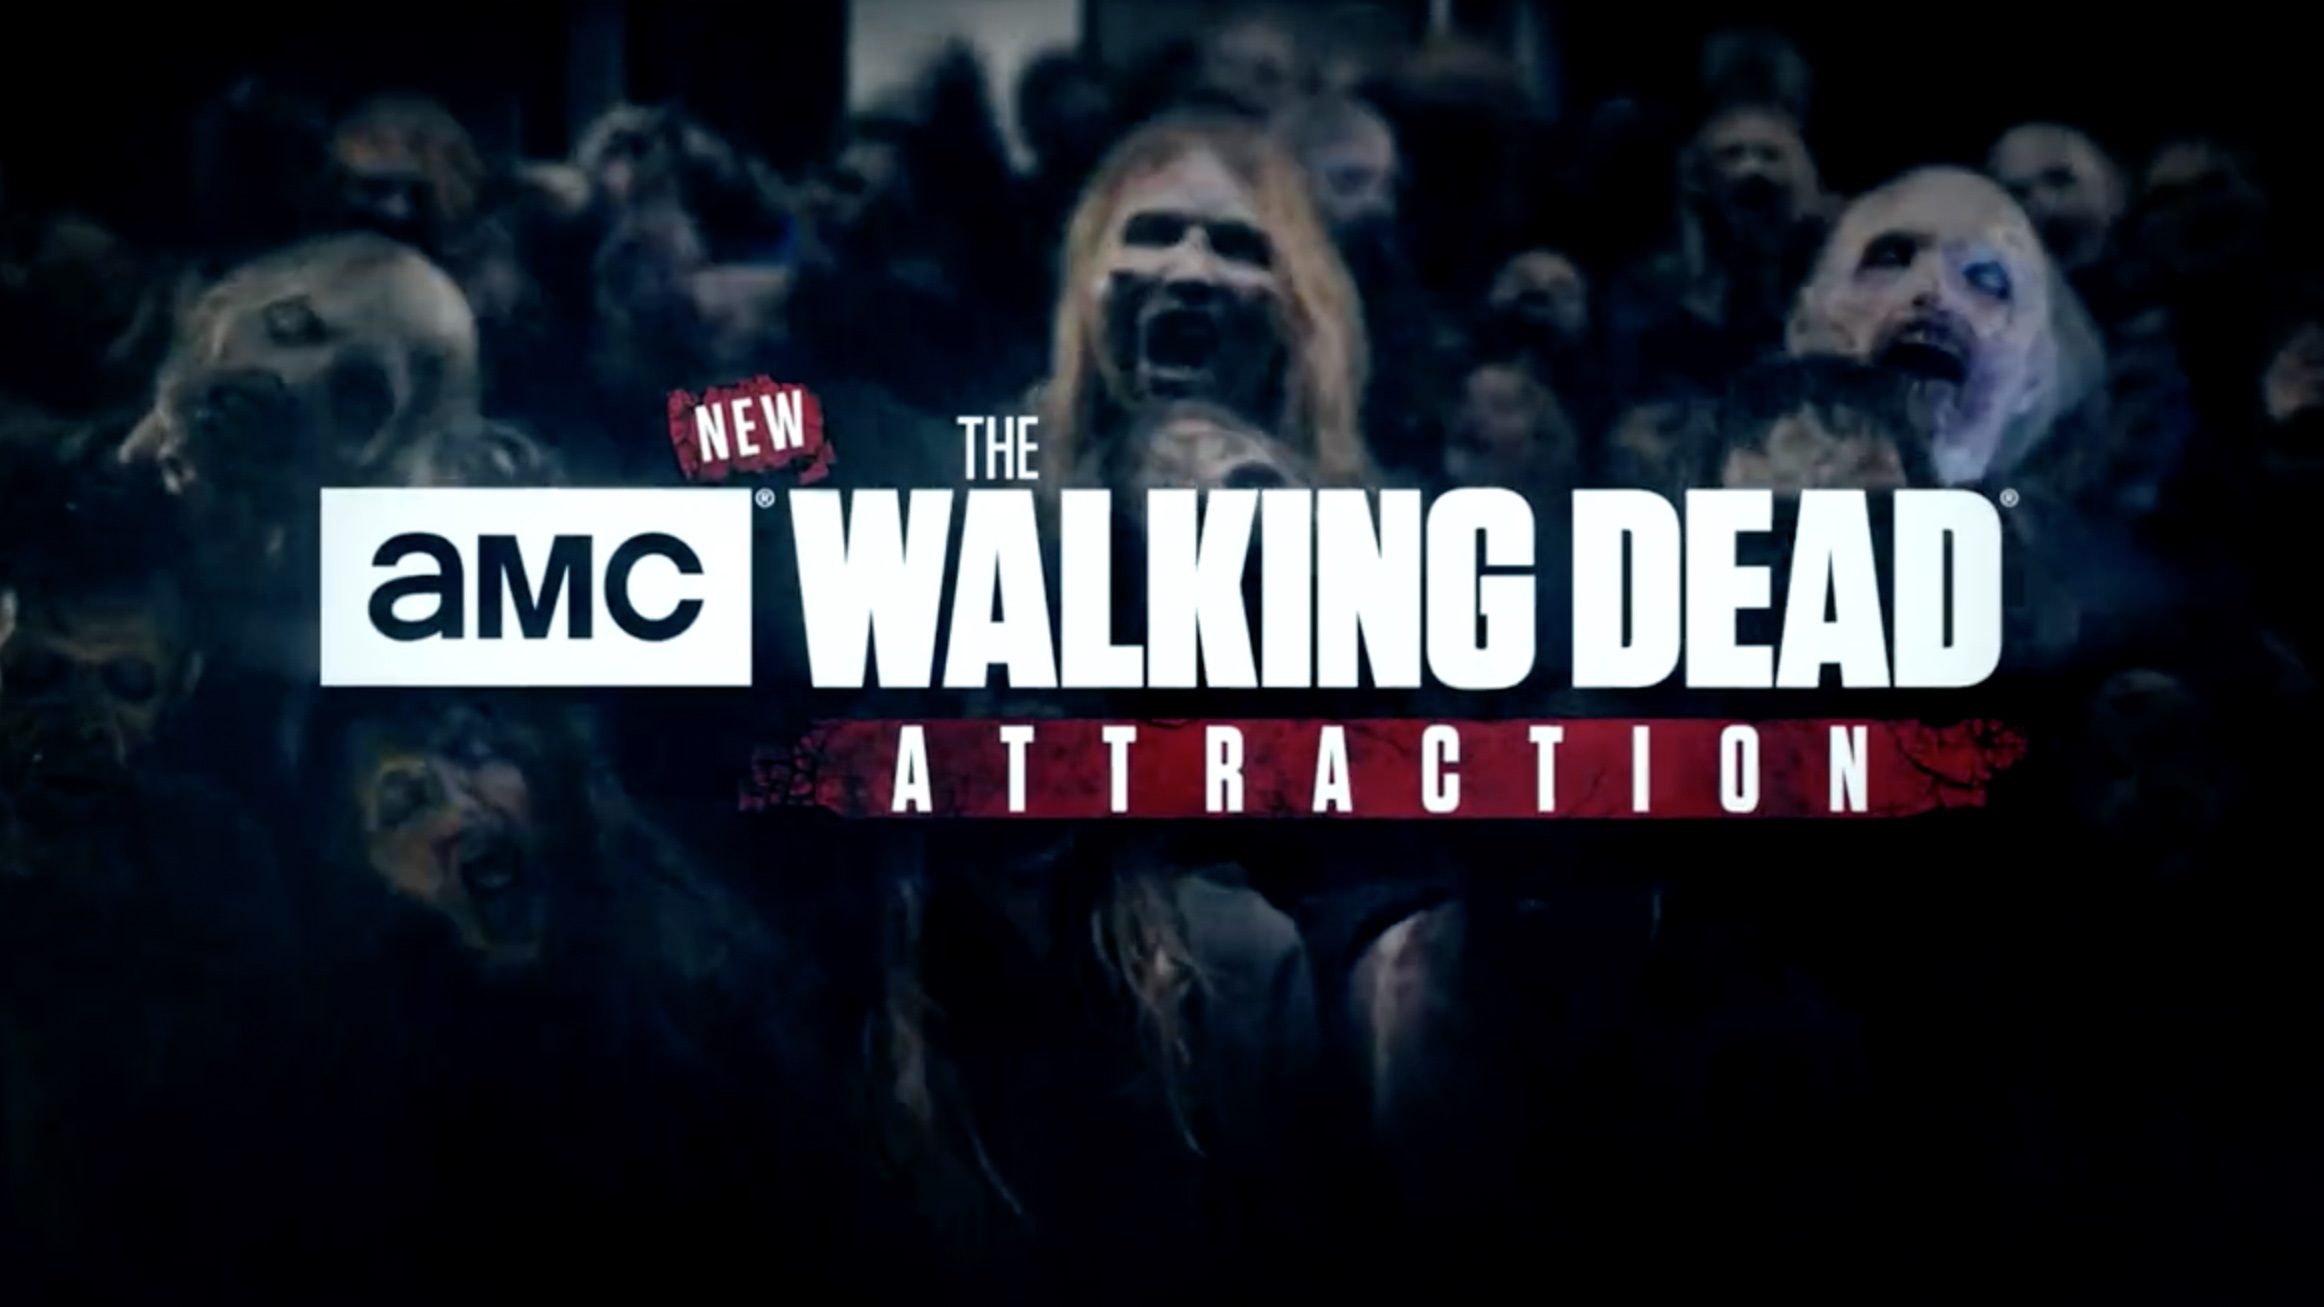 WATCH: Universal Studios launches ‘Walking Dead’ attraction